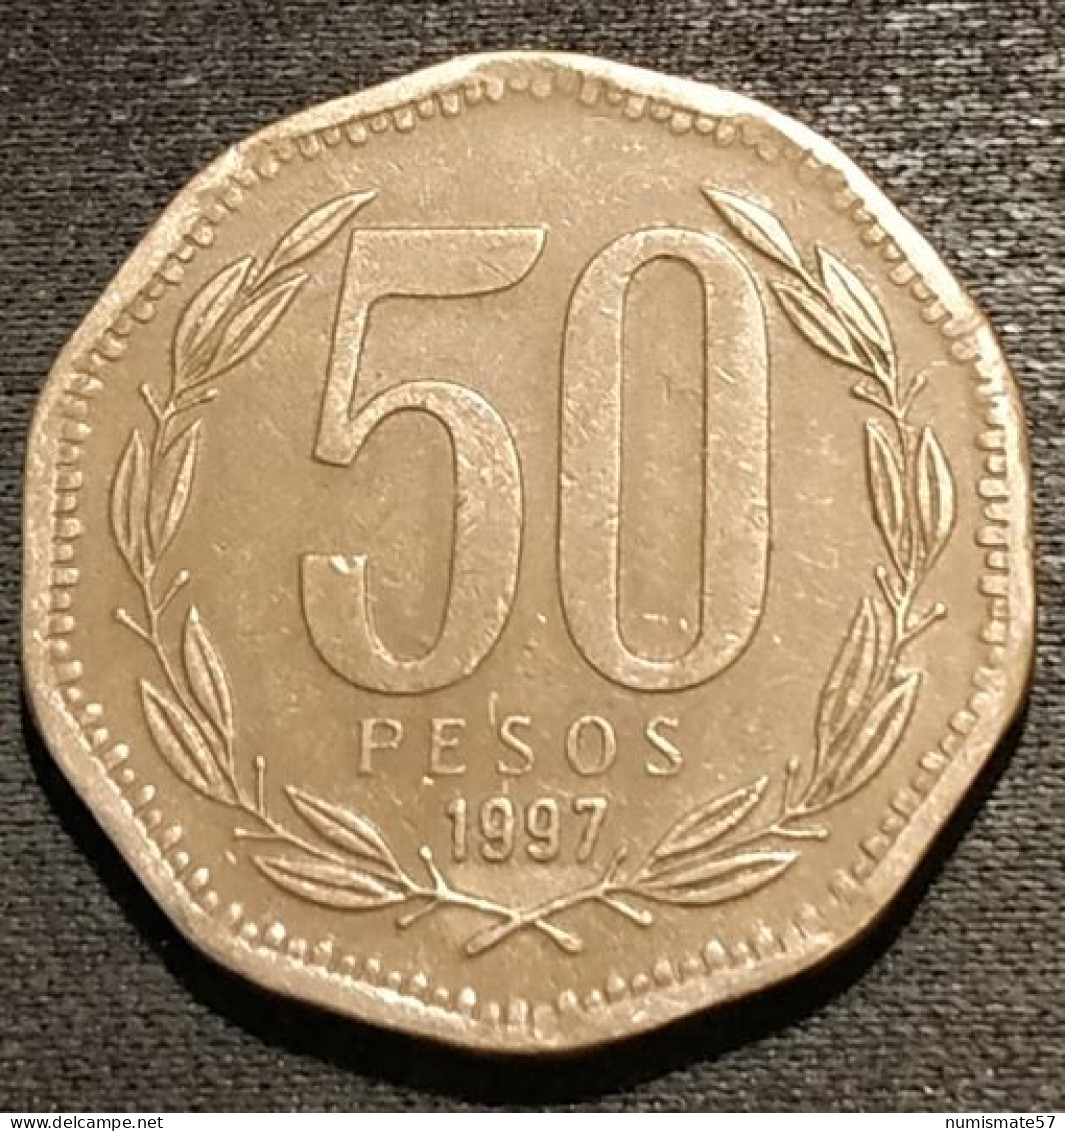 CHILI - CHILE - 50 PESOS 1997 - Bernardo O'Higgins Riquelme - KM 219.2 - ( Bronze-aluminium ) - Chile